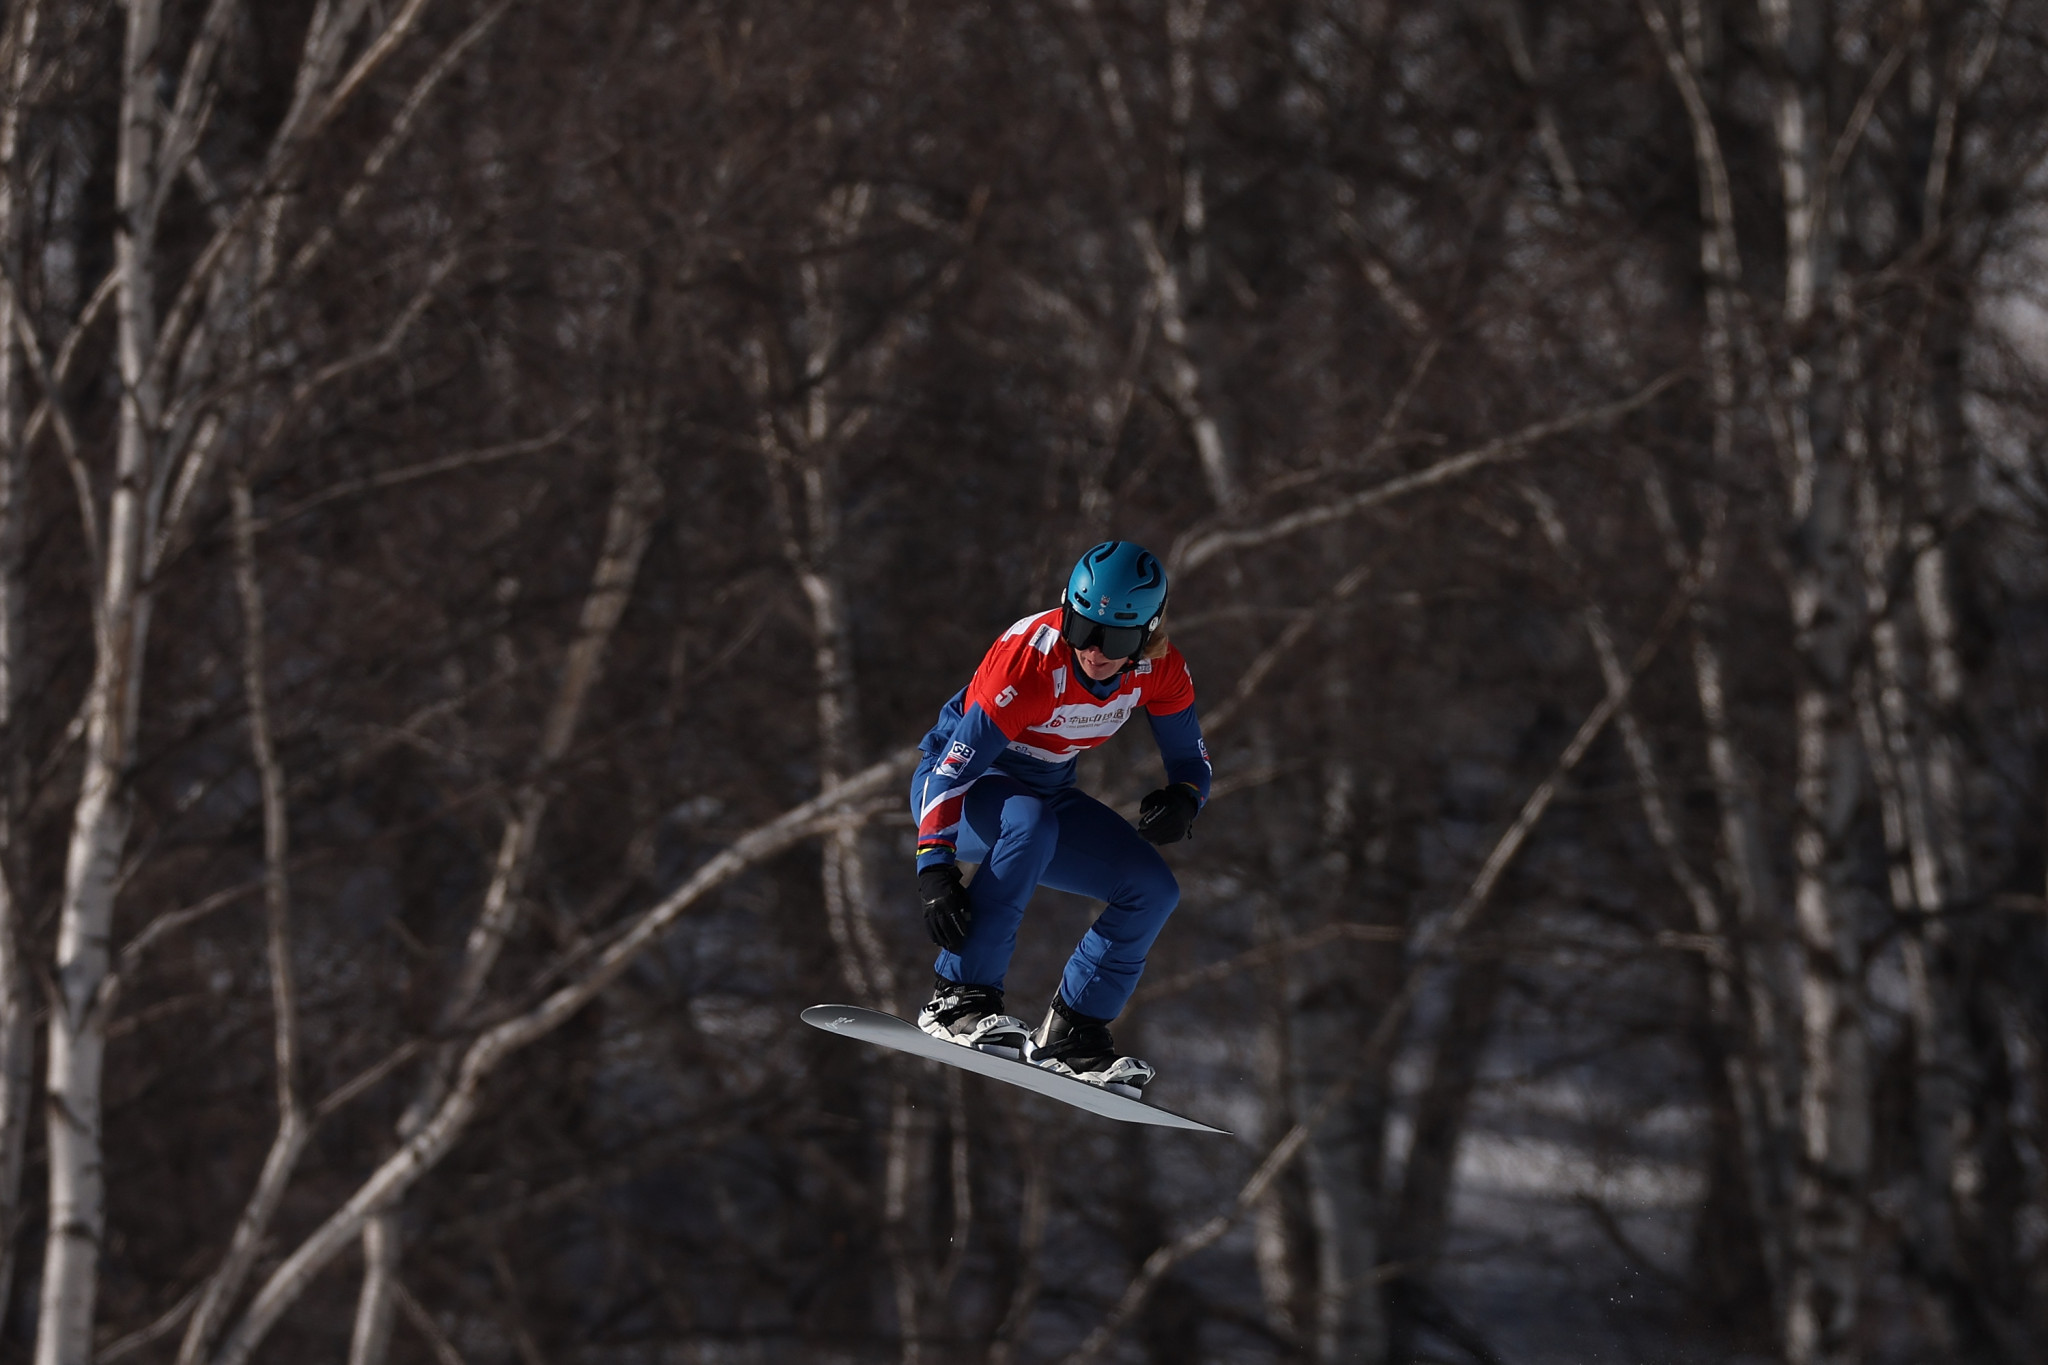 Bankes and Nörl win again at Snowboard Cross World Cup in Krasnoyarsk